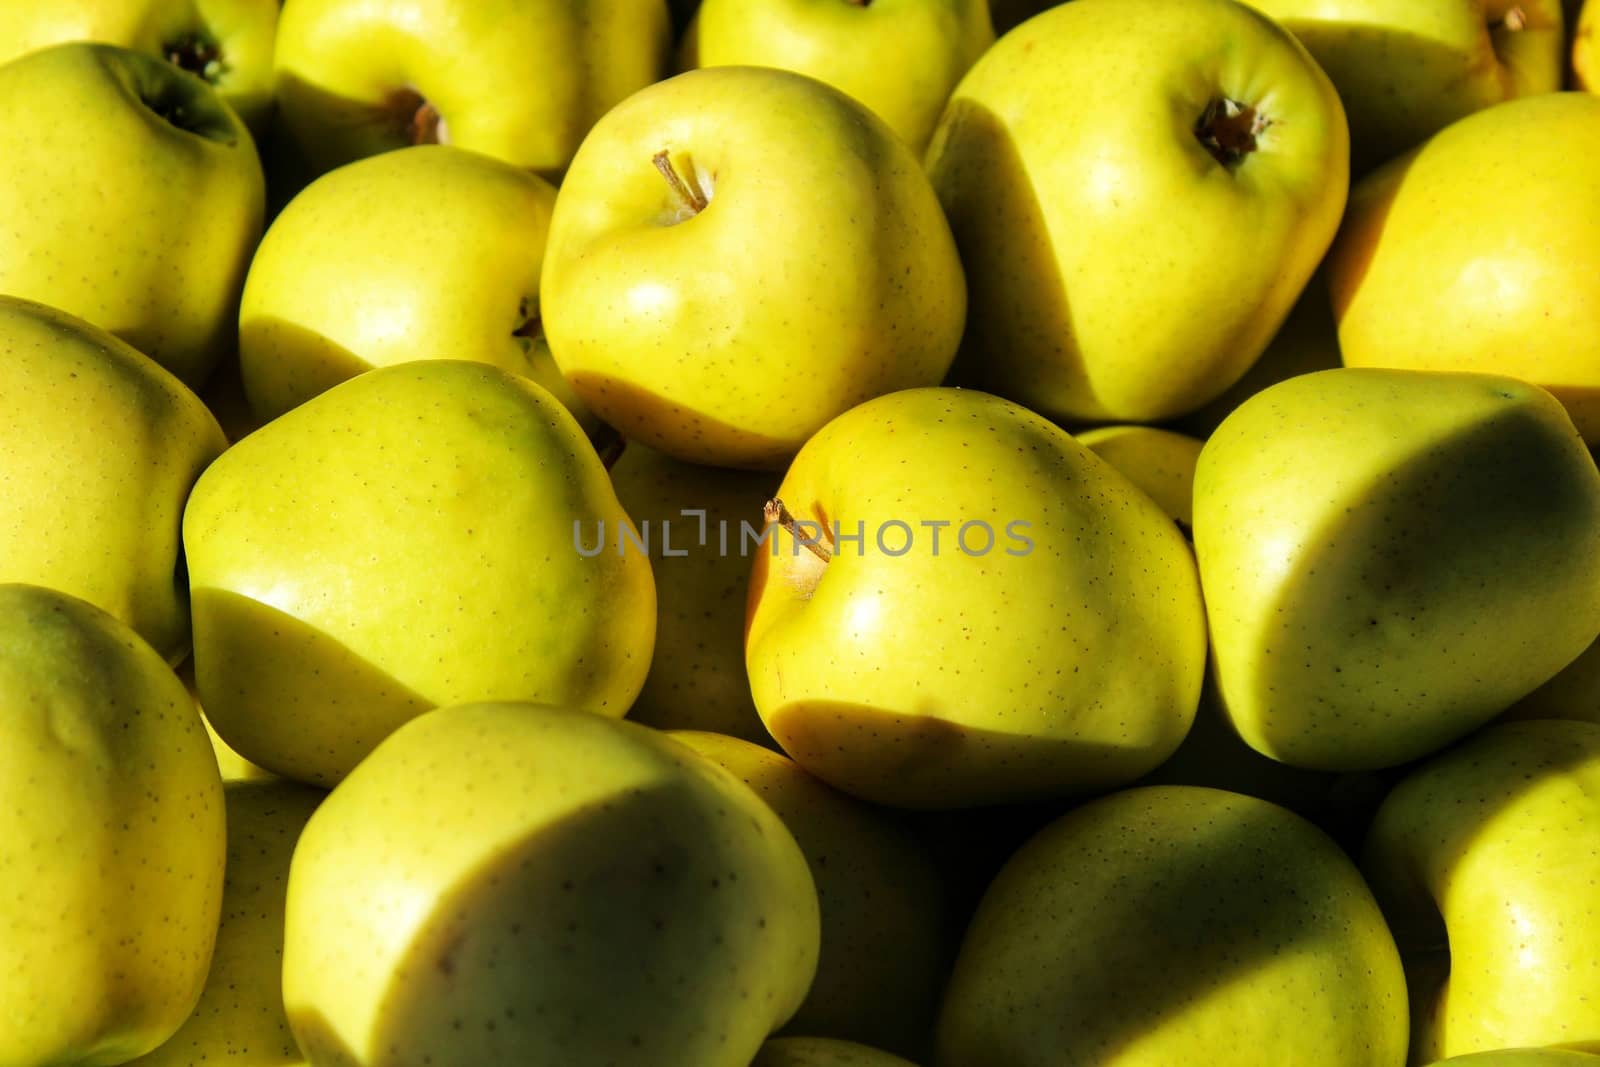 Apples for sale at a farmer market stall in Santa Pola, Alicante, Spain